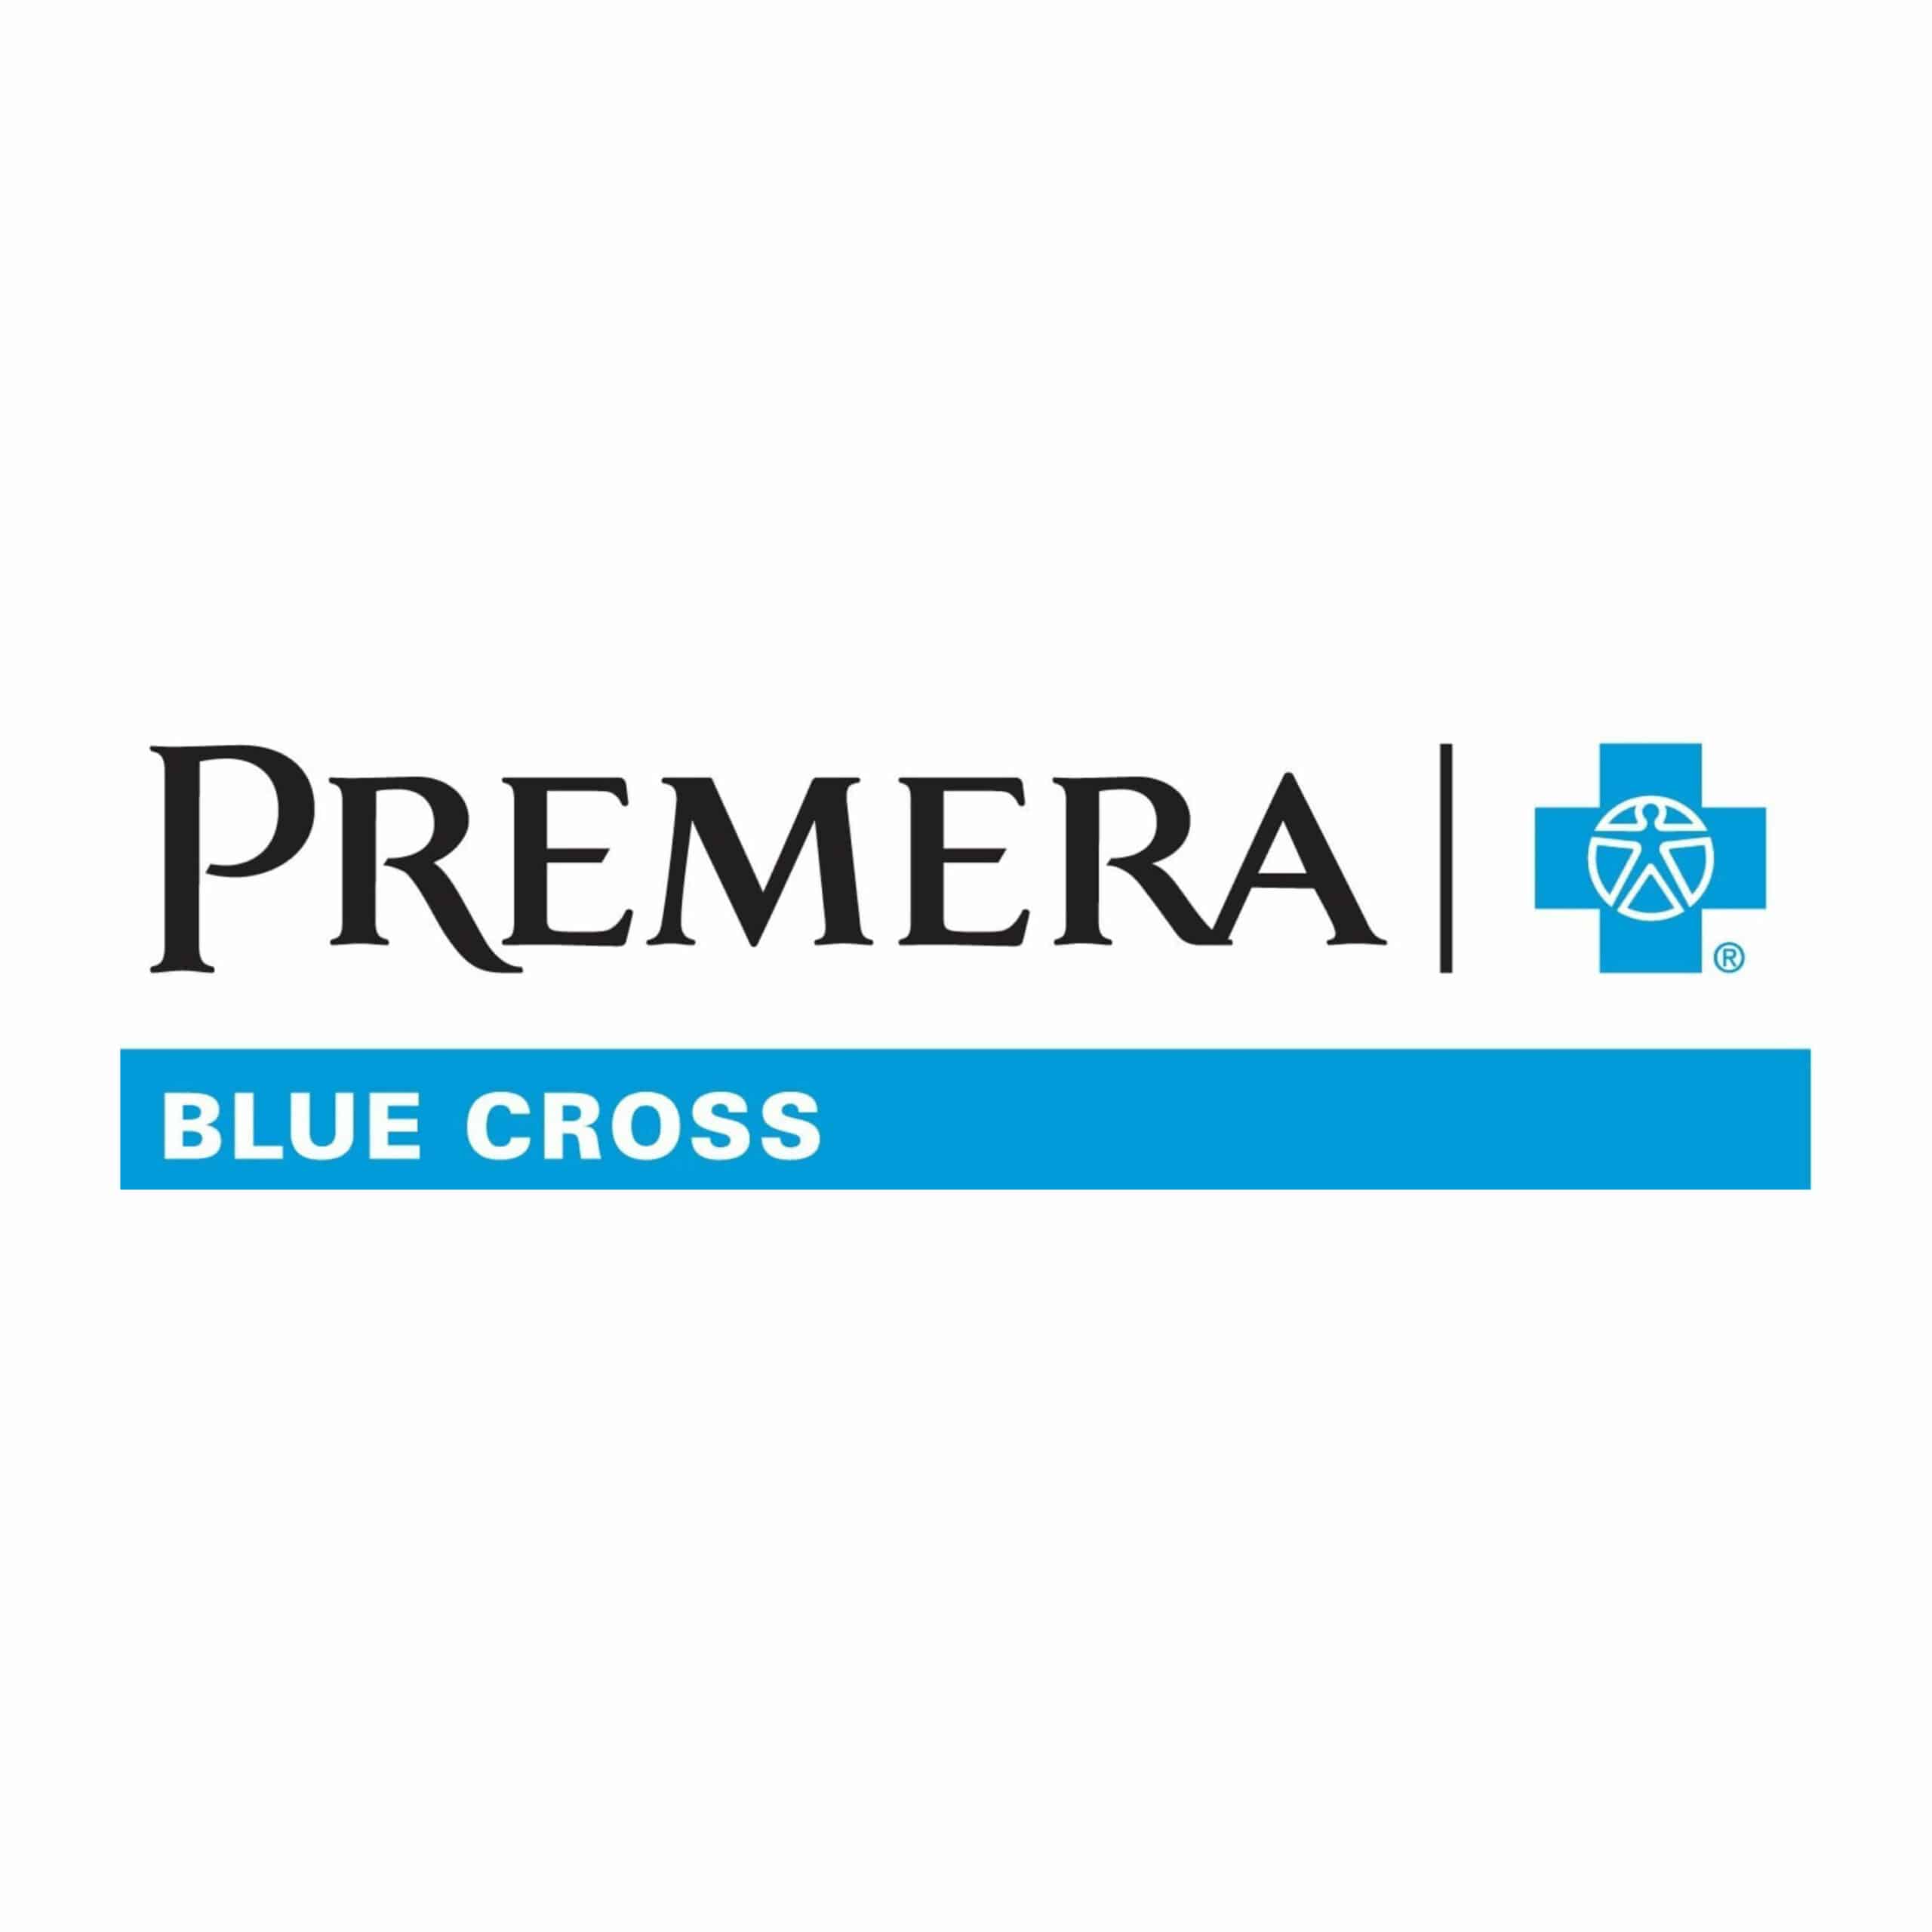 premera blue cross